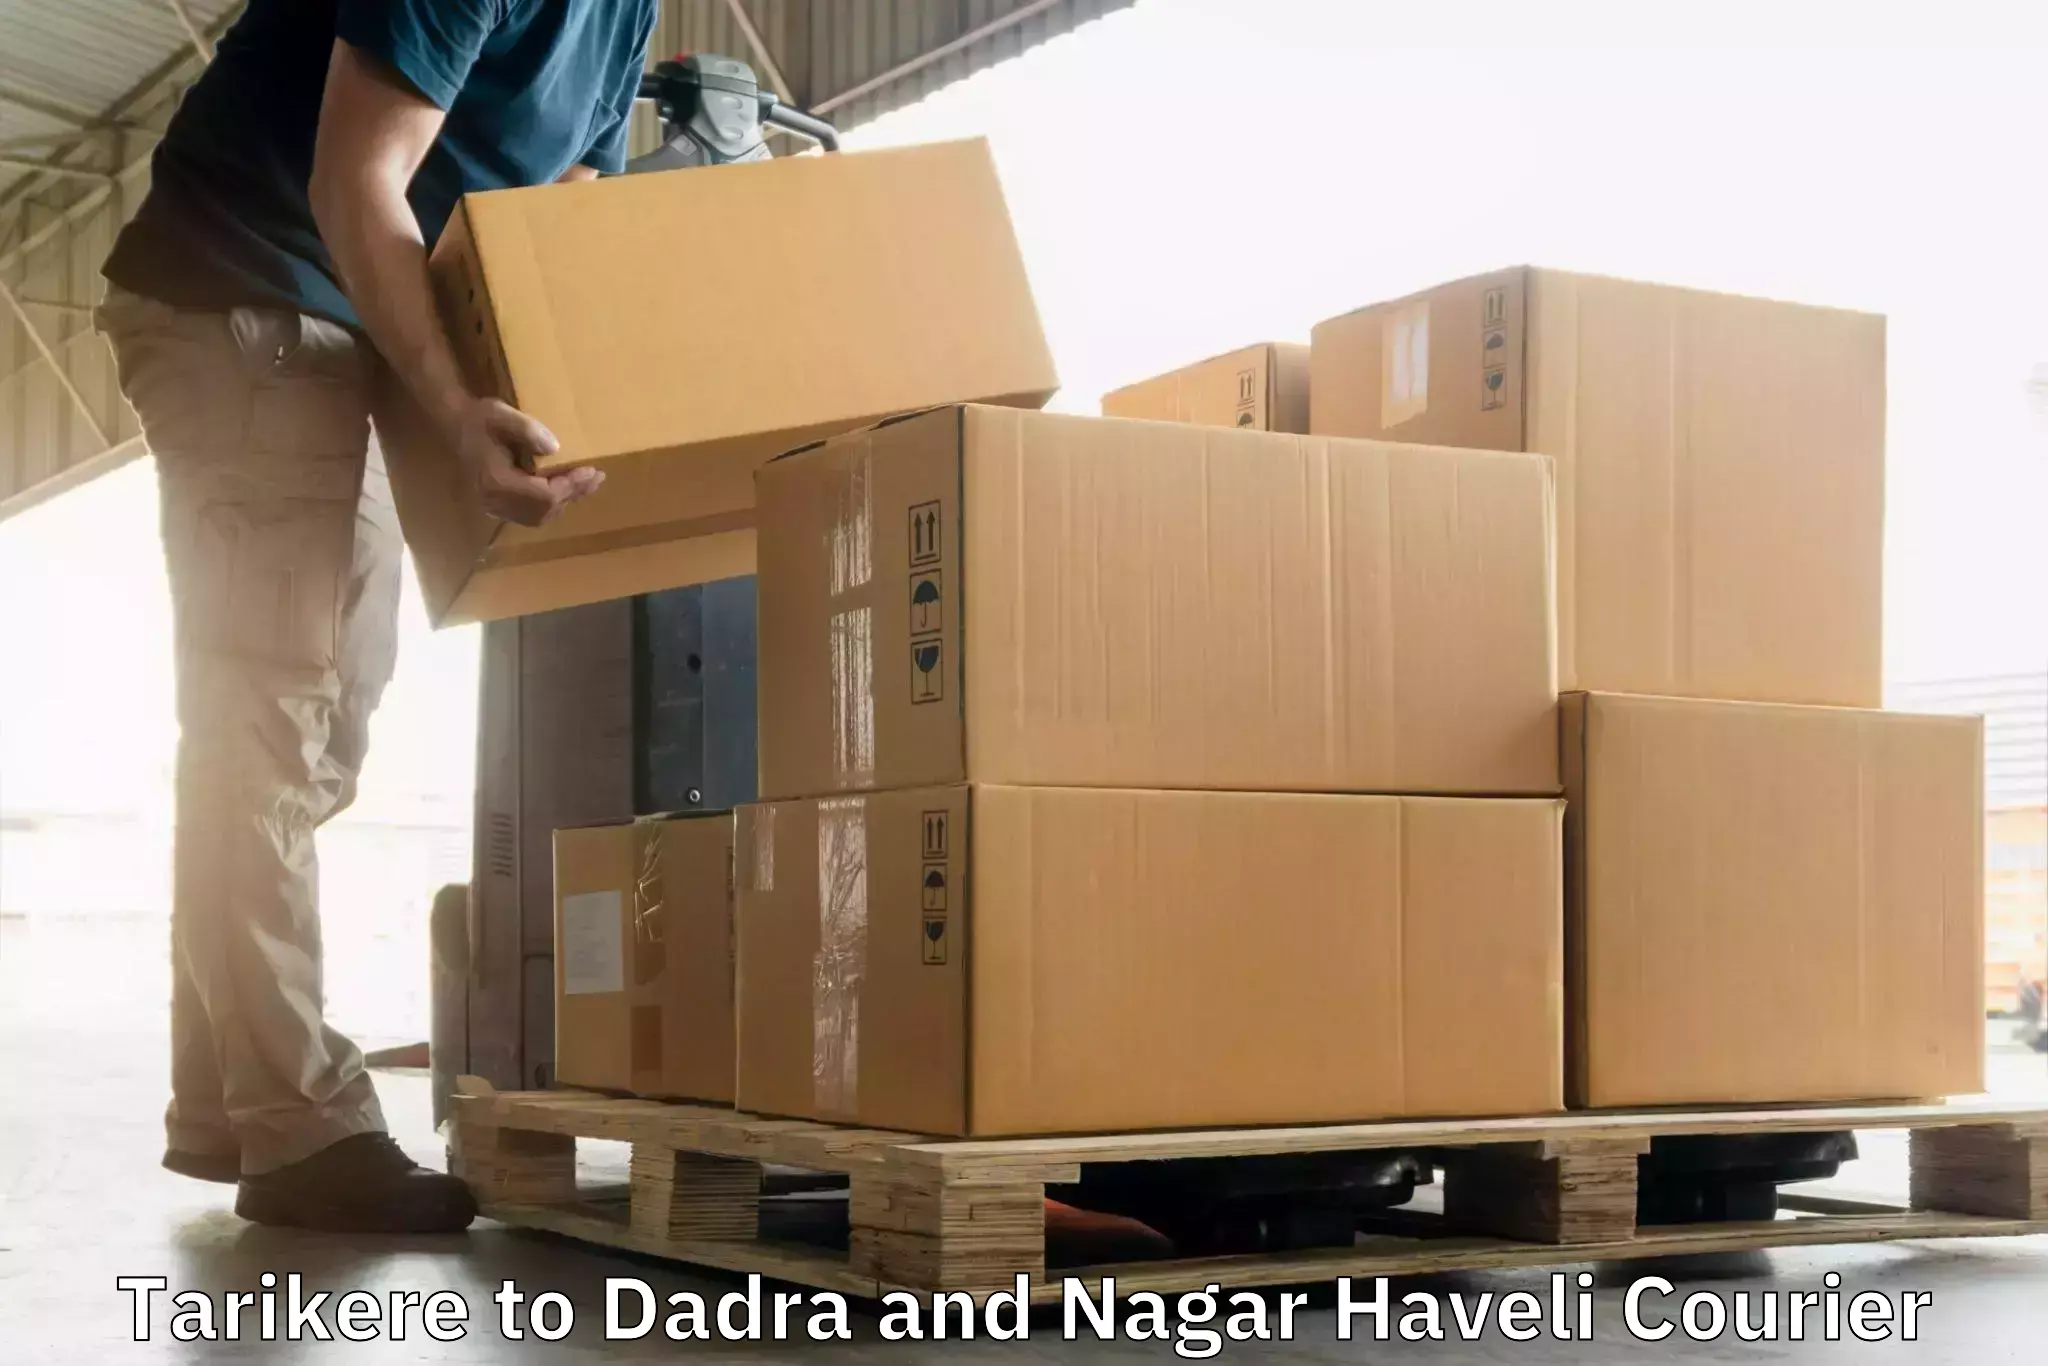 Courier service partnerships Tarikere to Dadra and Nagar Haveli